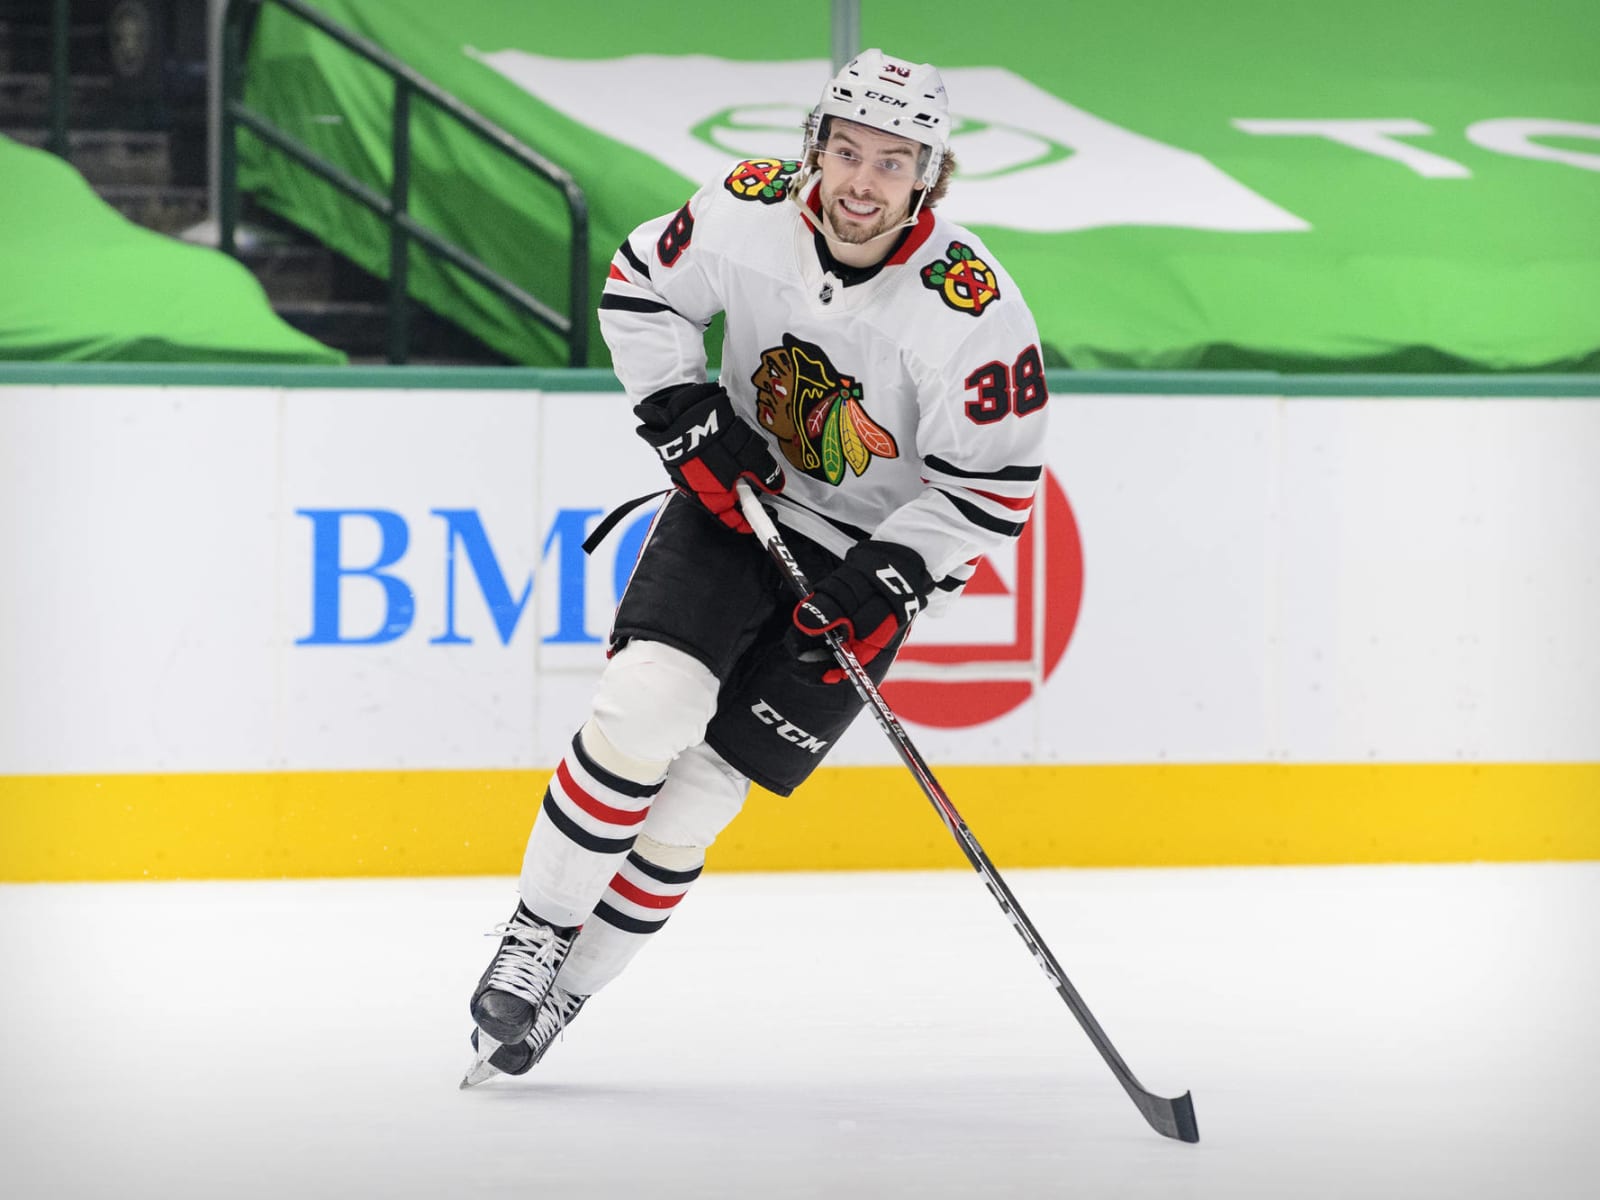 NHL Trade Deadline Primer: Brandon Hagel is intriguing, but risky